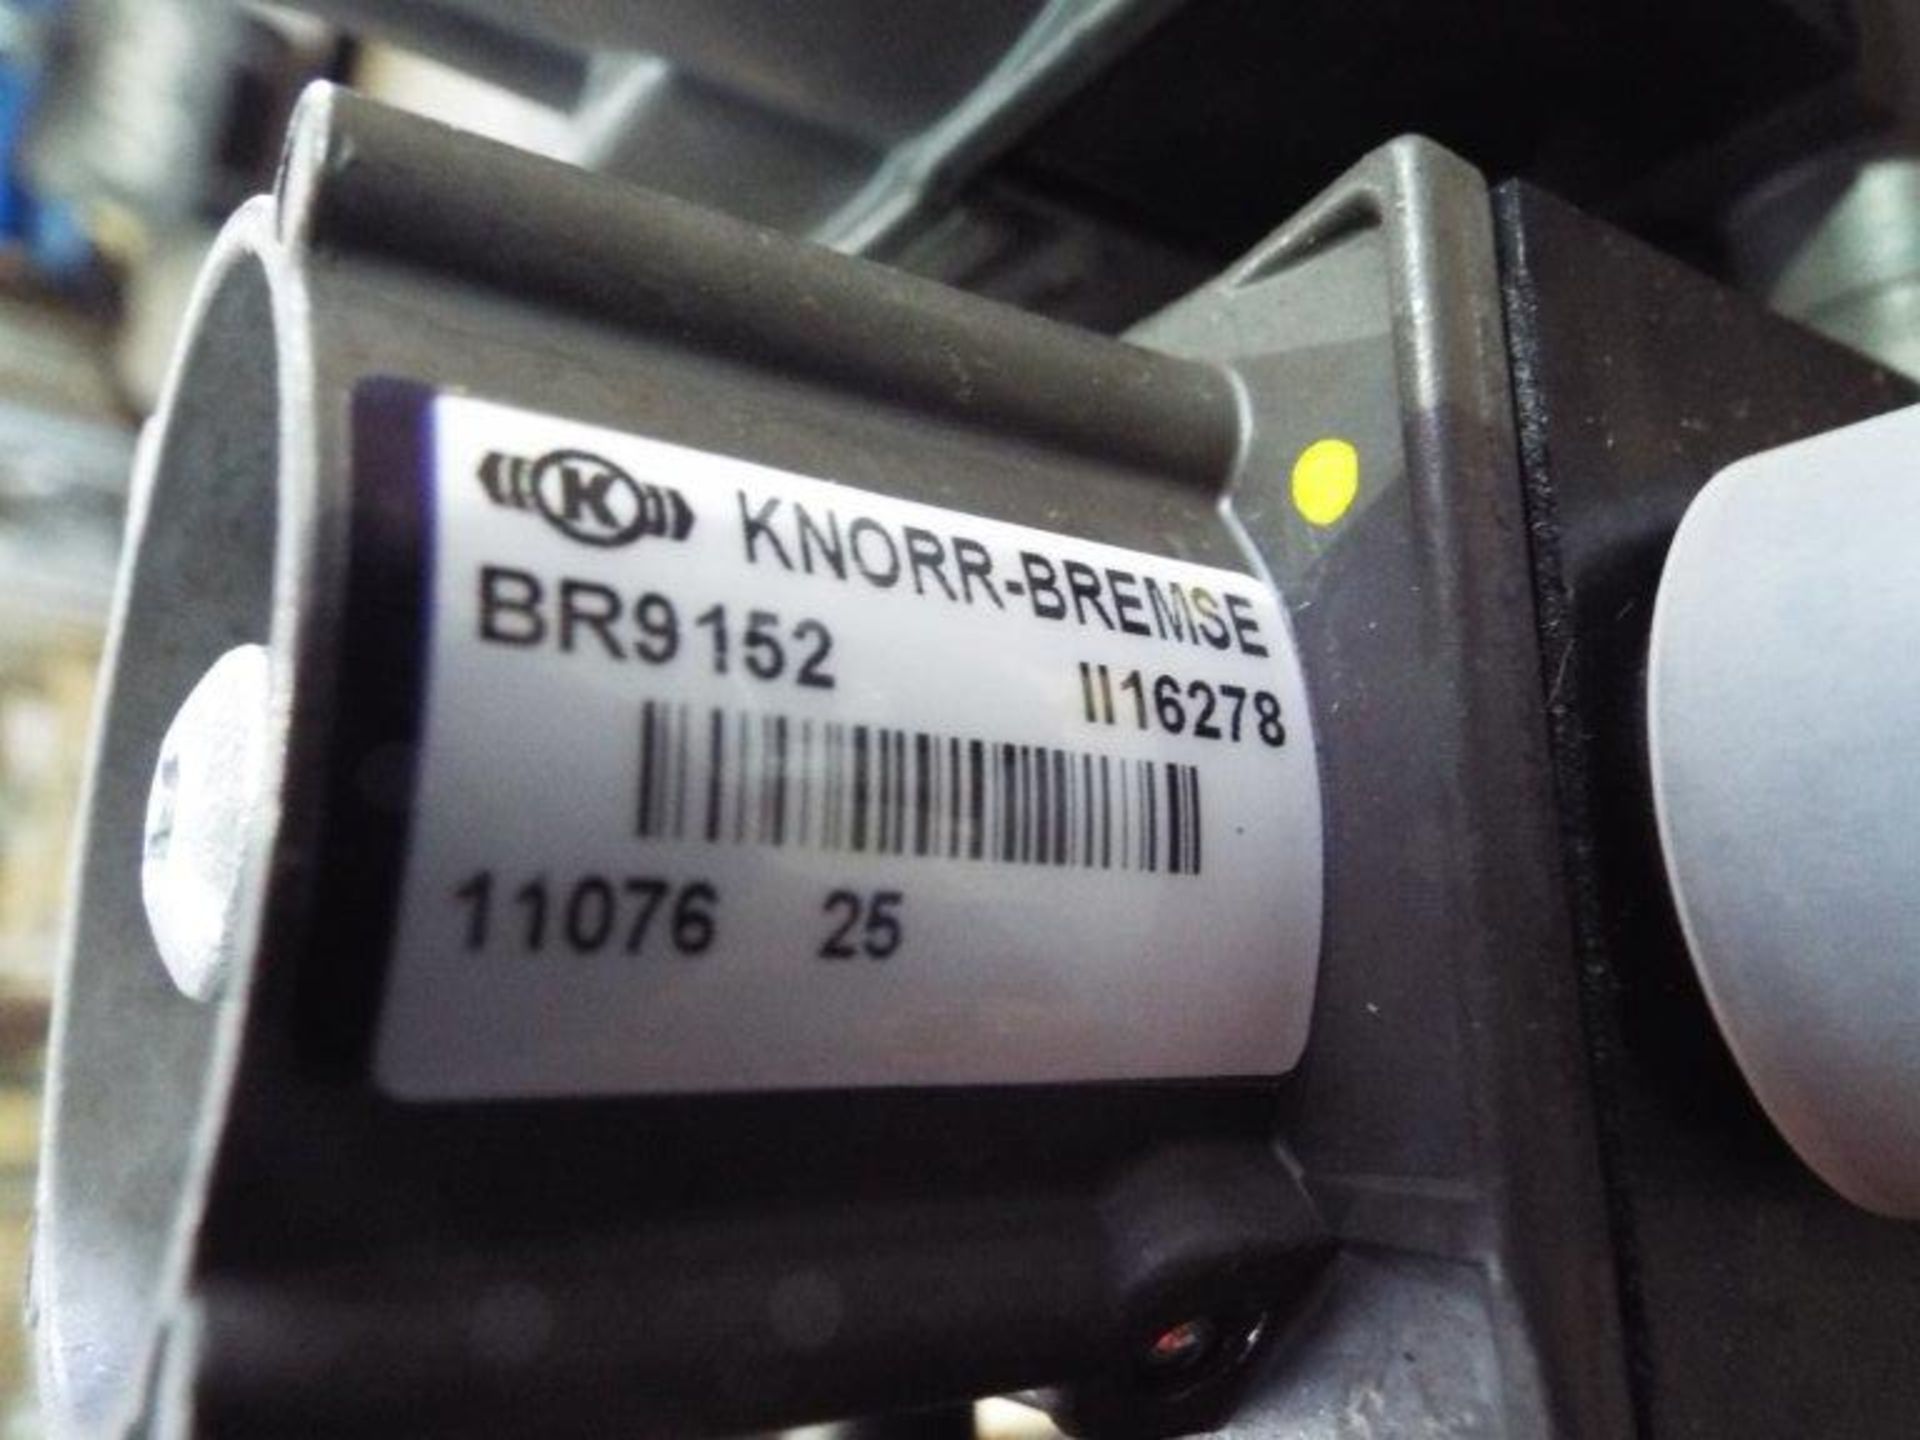 9 x Knorr Bremse / Supacat Hydraulic Valve Blocks P/No 70-30-161 - Image 5 of 7